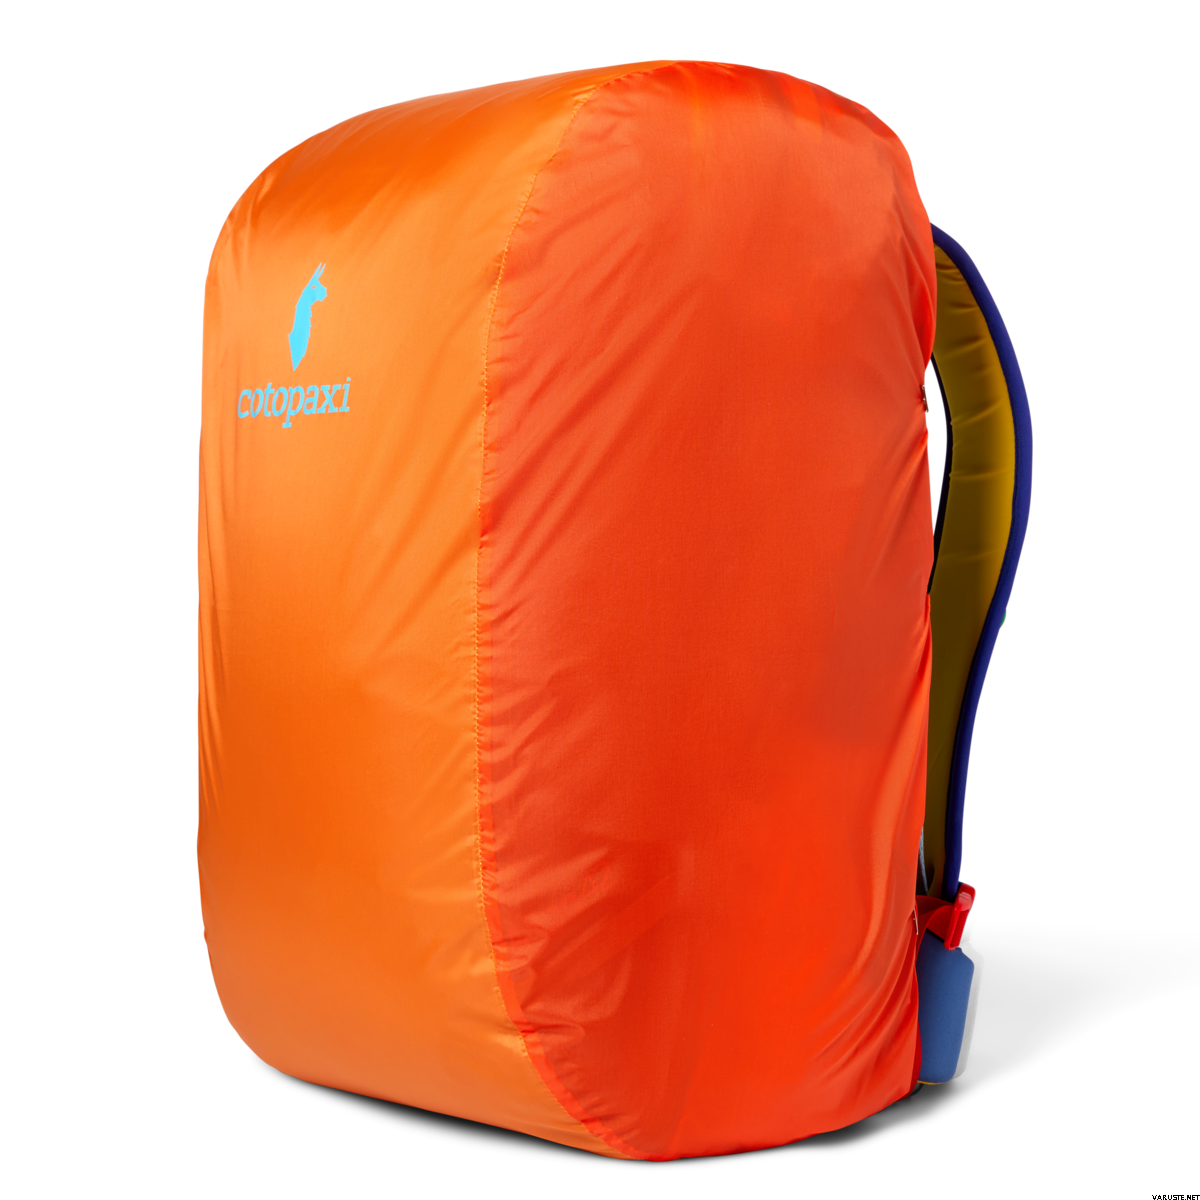 Cotopaxi Allpa 42L Travel Pack - Del Dia | Carry-on bags | Varuste.net ...